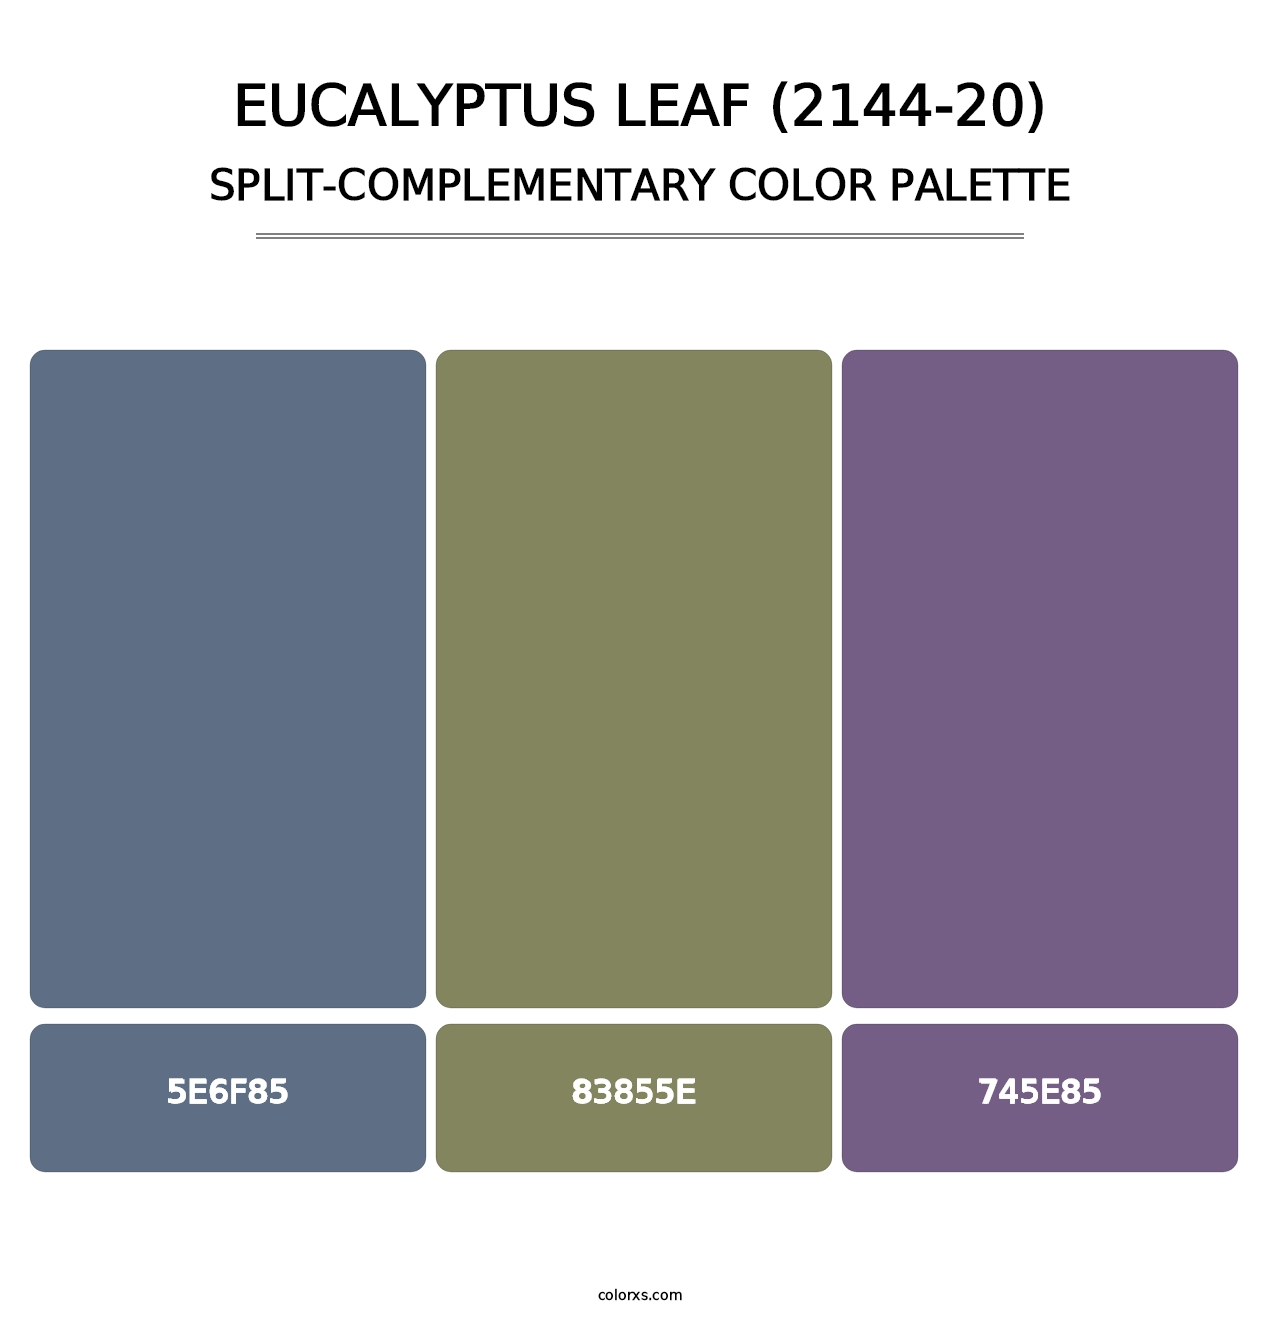 Eucalyptus Leaf (2144-20) - Split-Complementary Color Palette